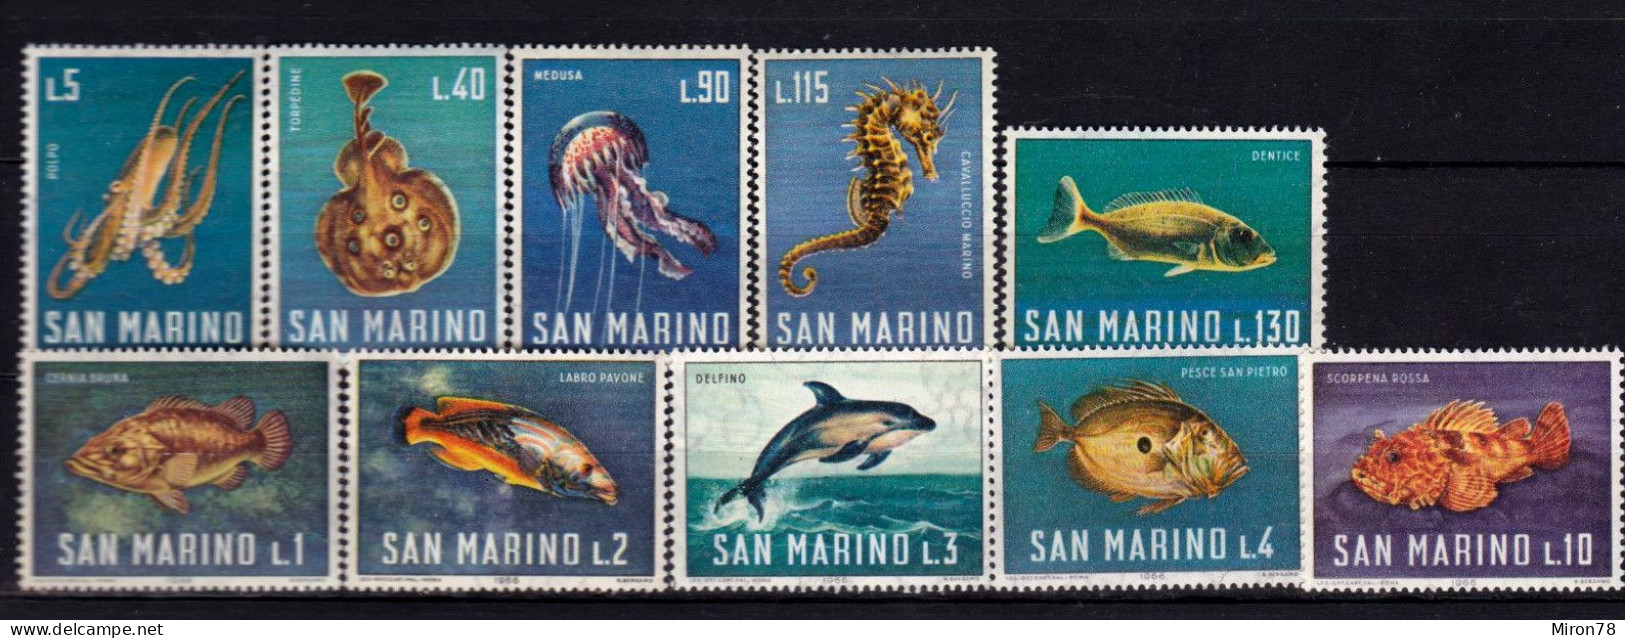 Stamps SAN MARINO MNH Lot40 - Unused Stamps